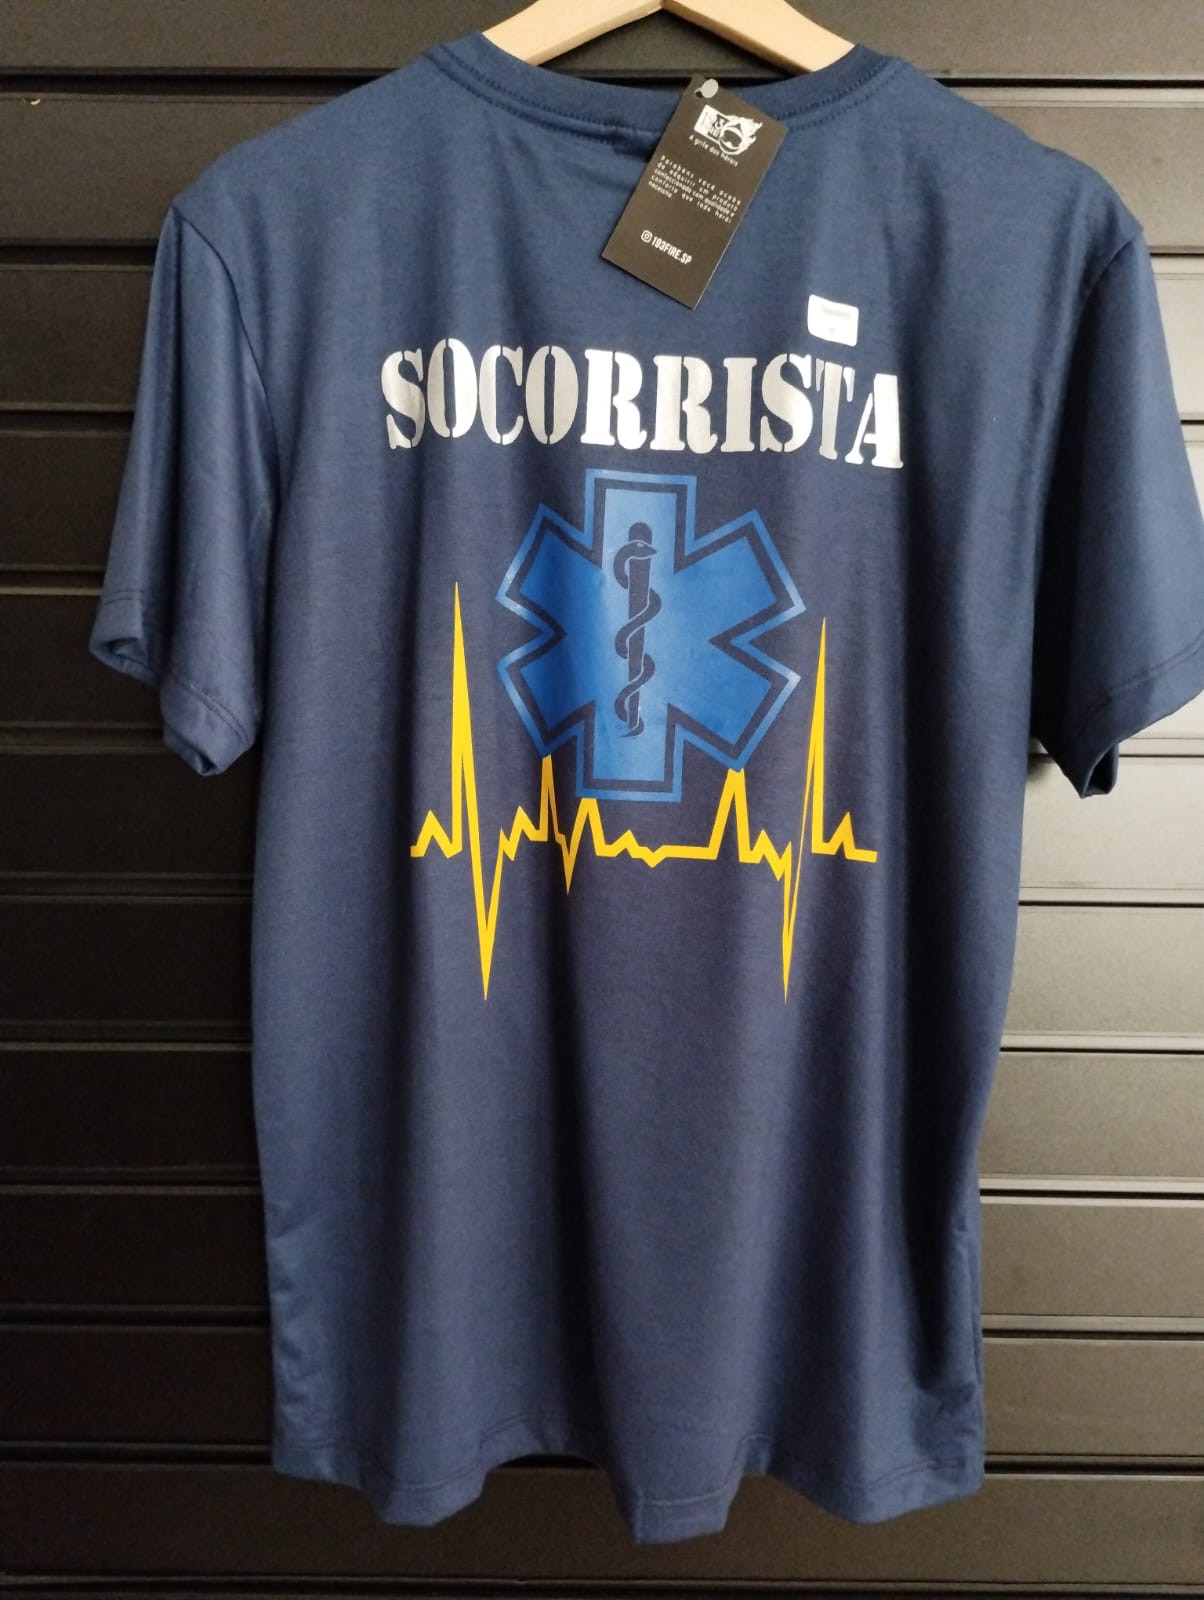 Camiseta Socorrista - Azul Marinho - 193 Fire